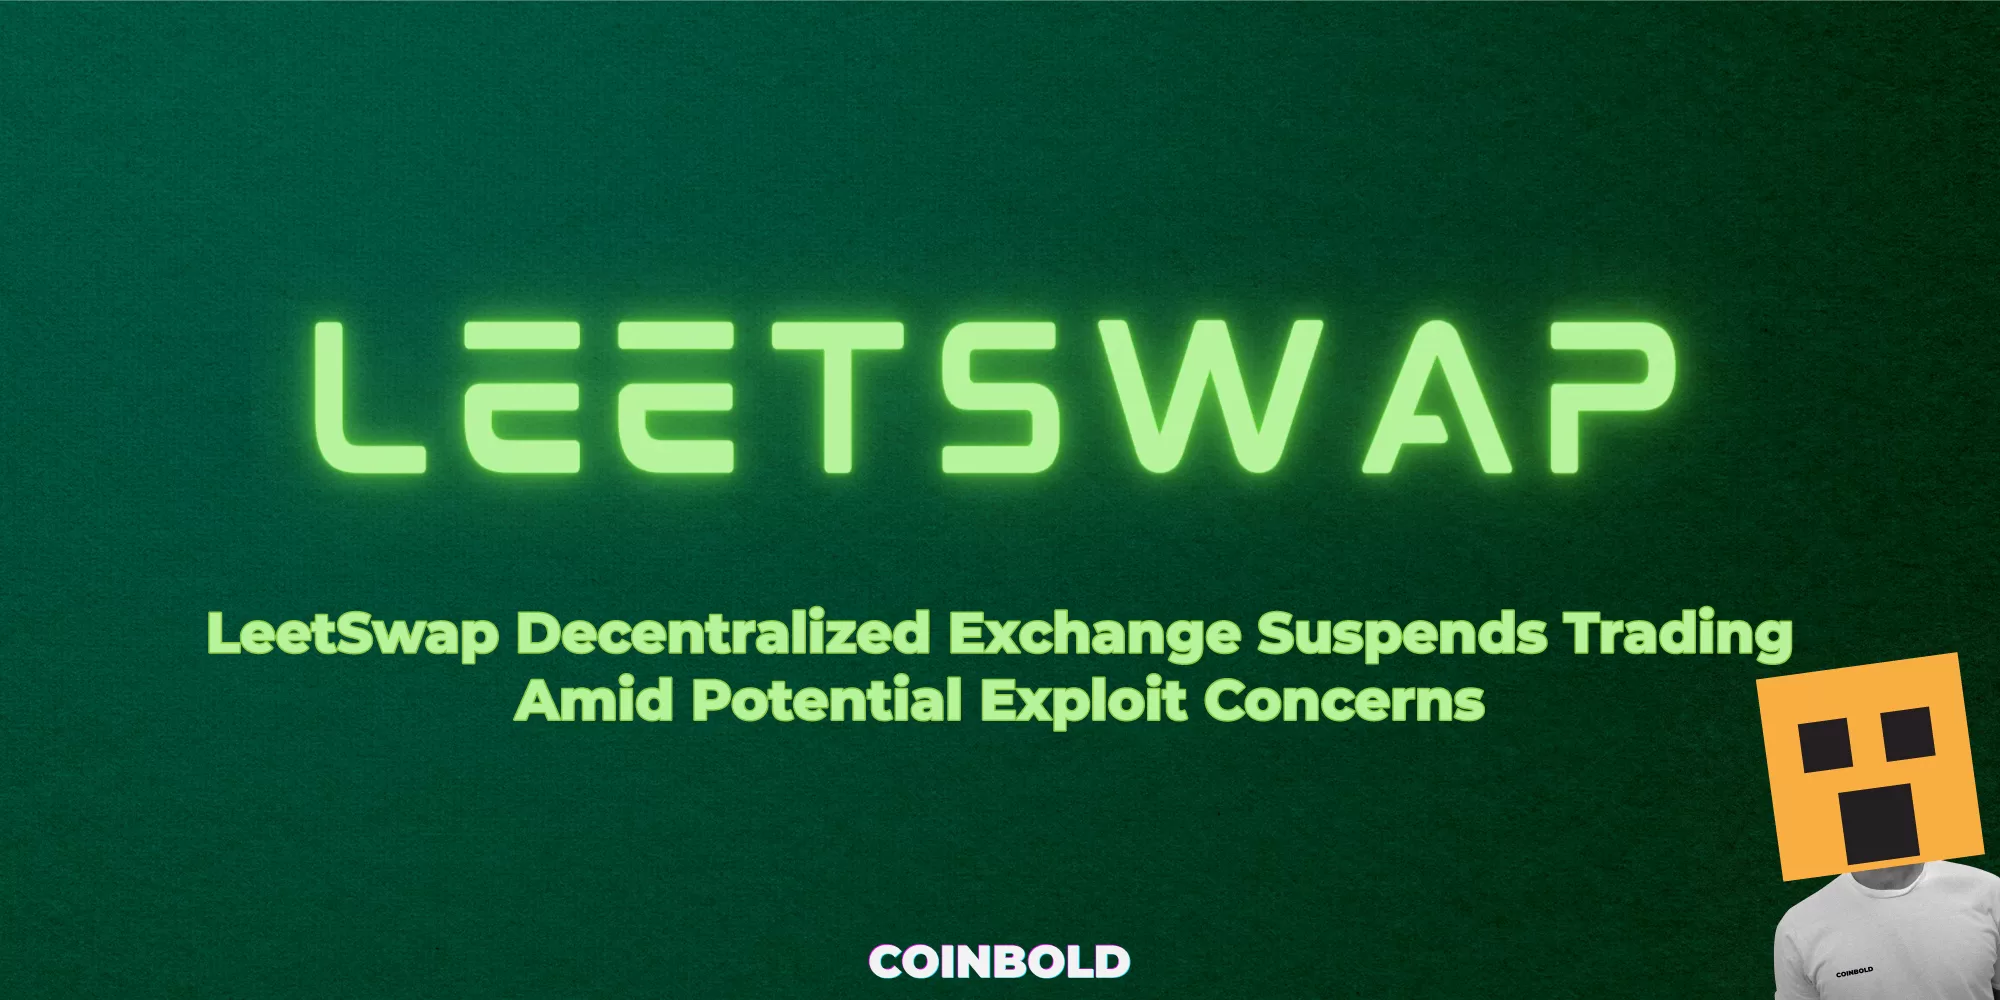 LeetSwap Decentralized Exchange Suspends Trading Amid Potential Exploit Concerns